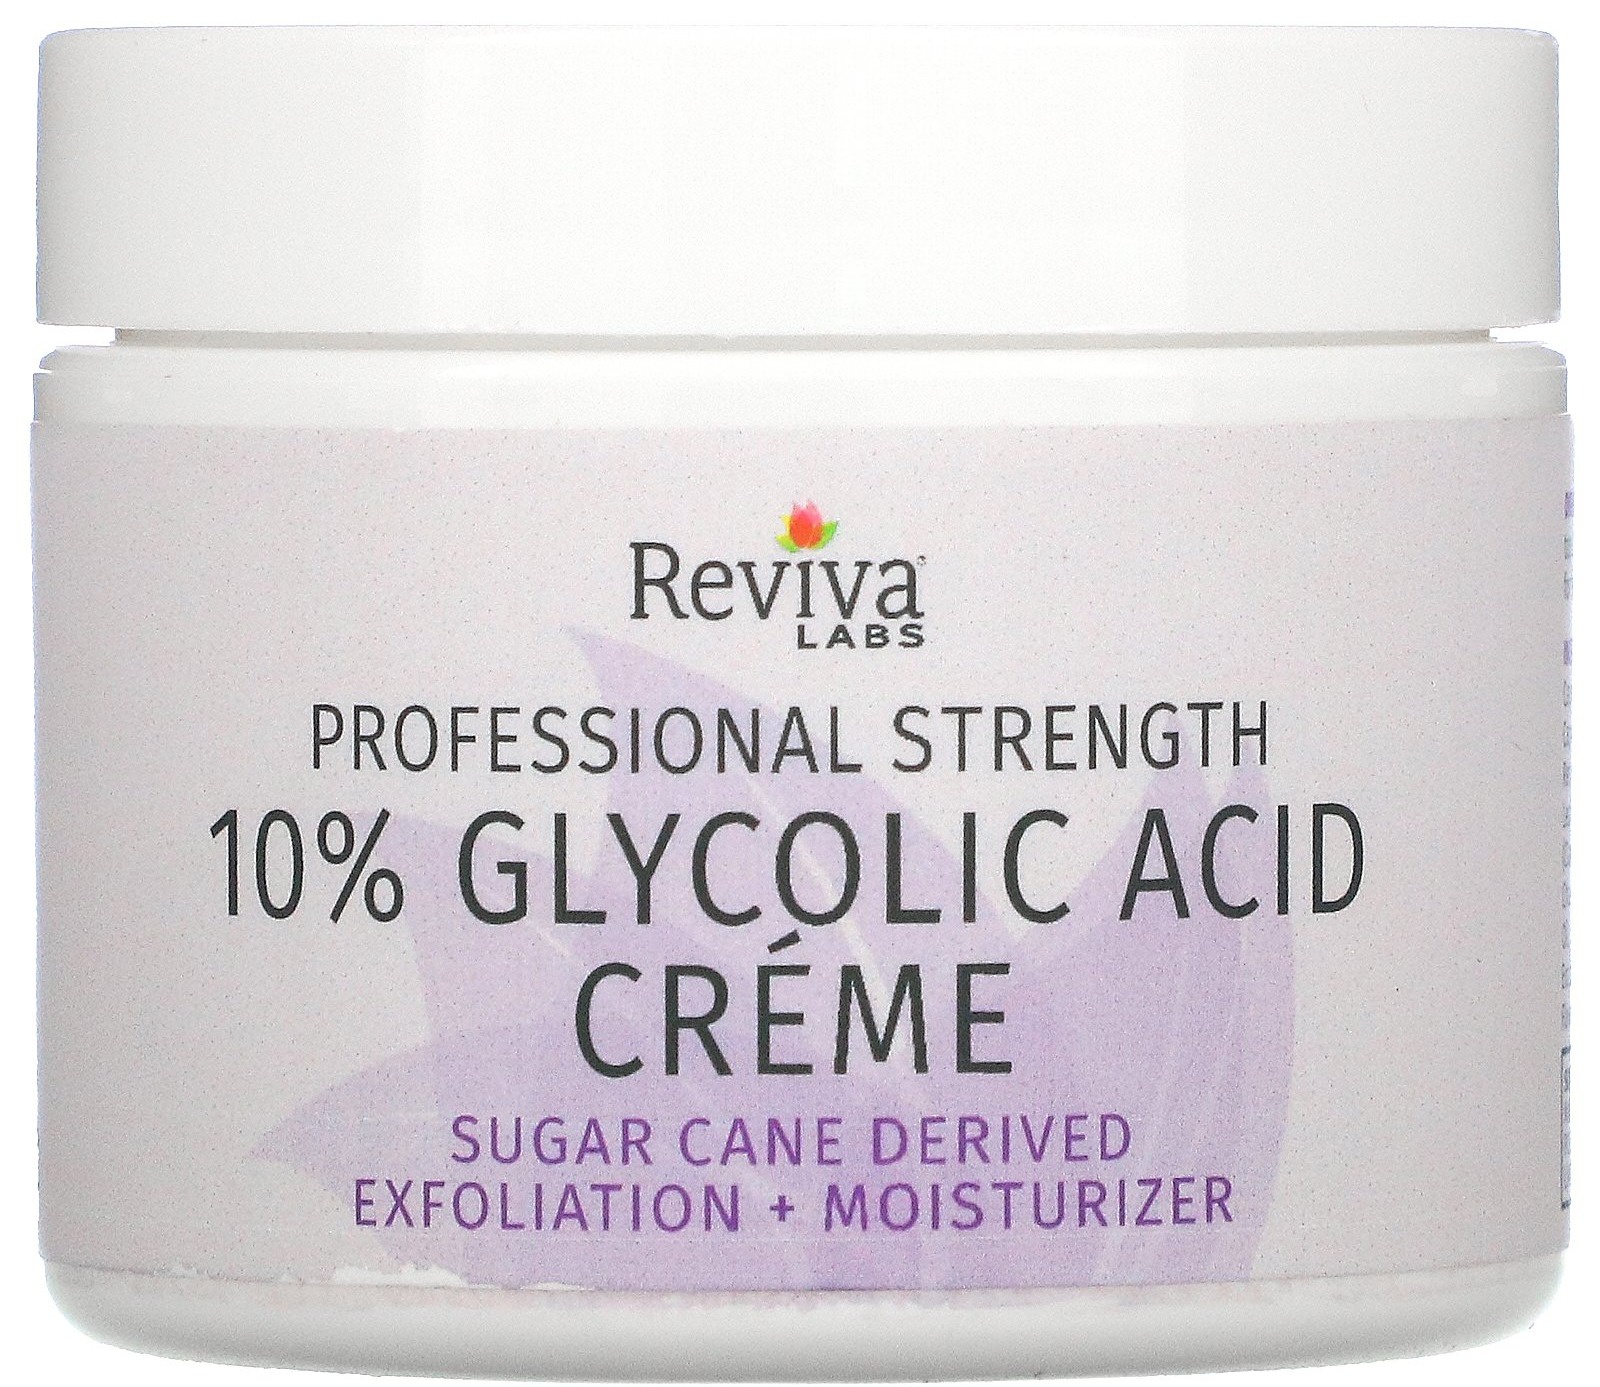 Reviva Labs 10% Glycolic Acid Creme